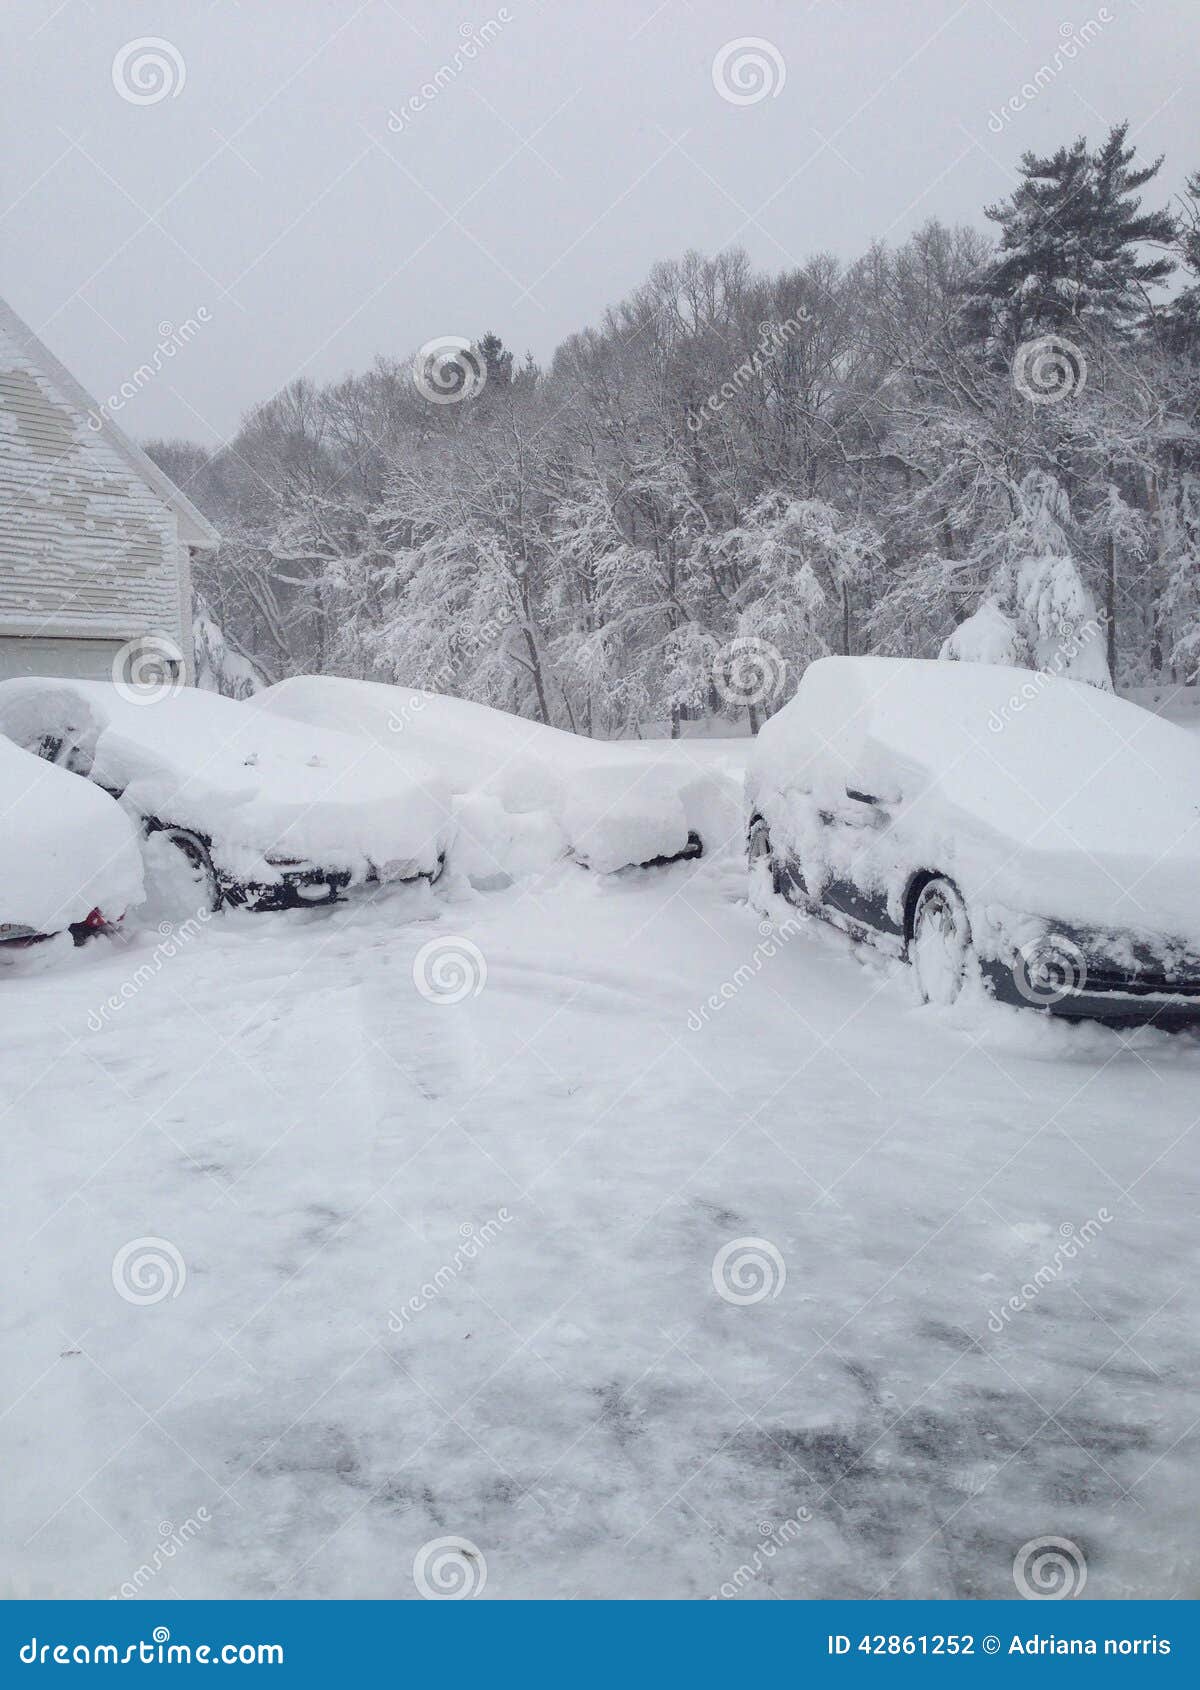 Snow cars stock photo. Image of driveway, snow, shovel - 42861252